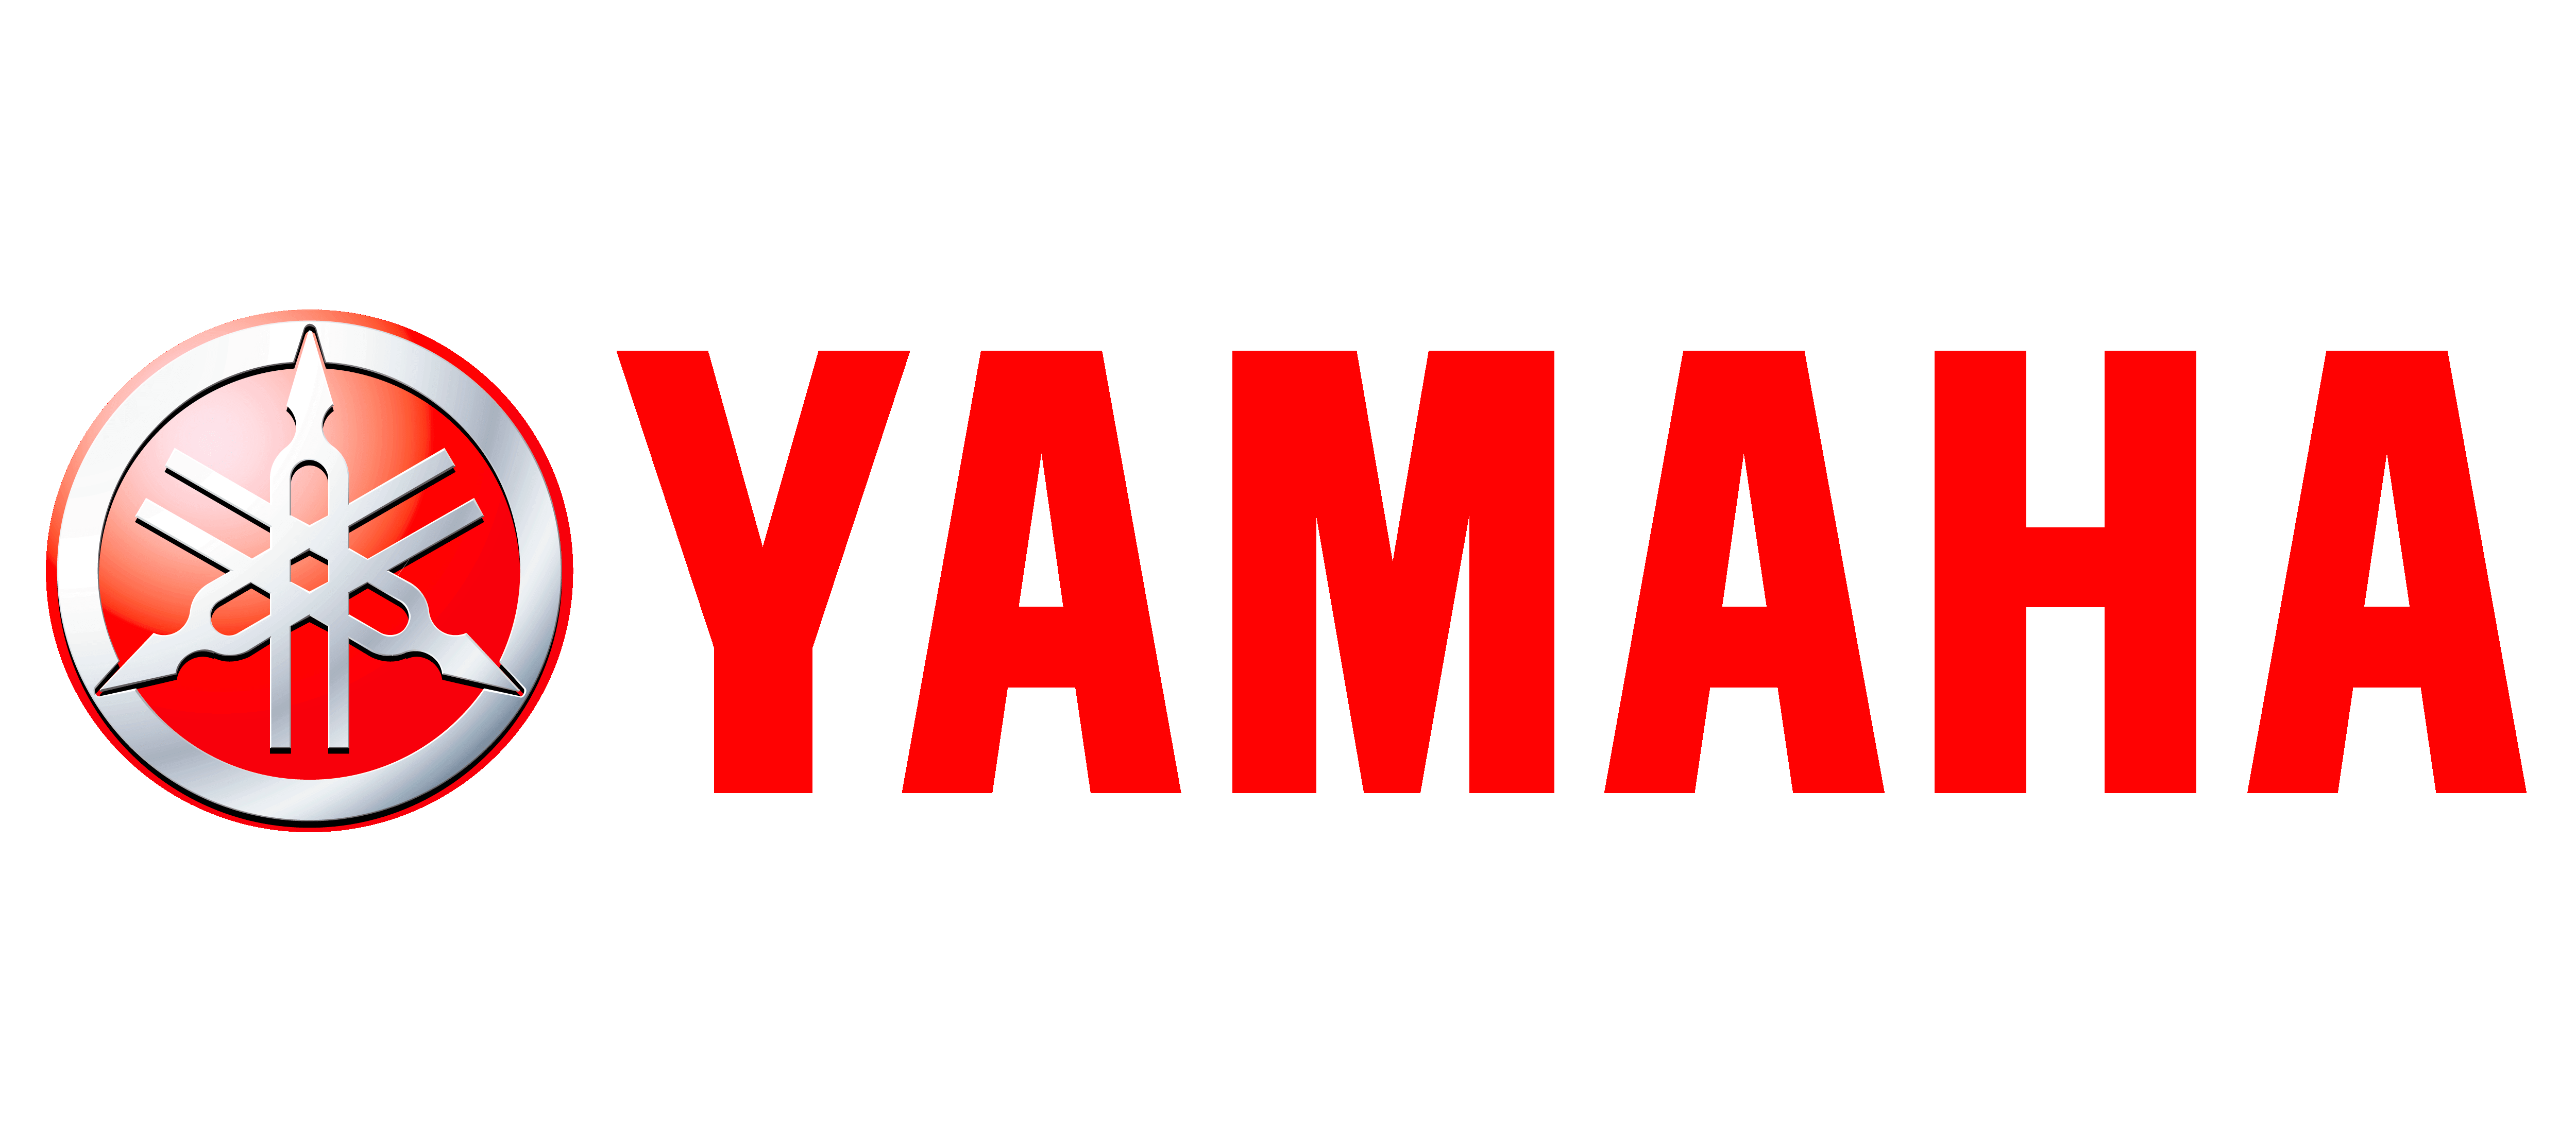 Marine Serwis Yamaha Warszawa